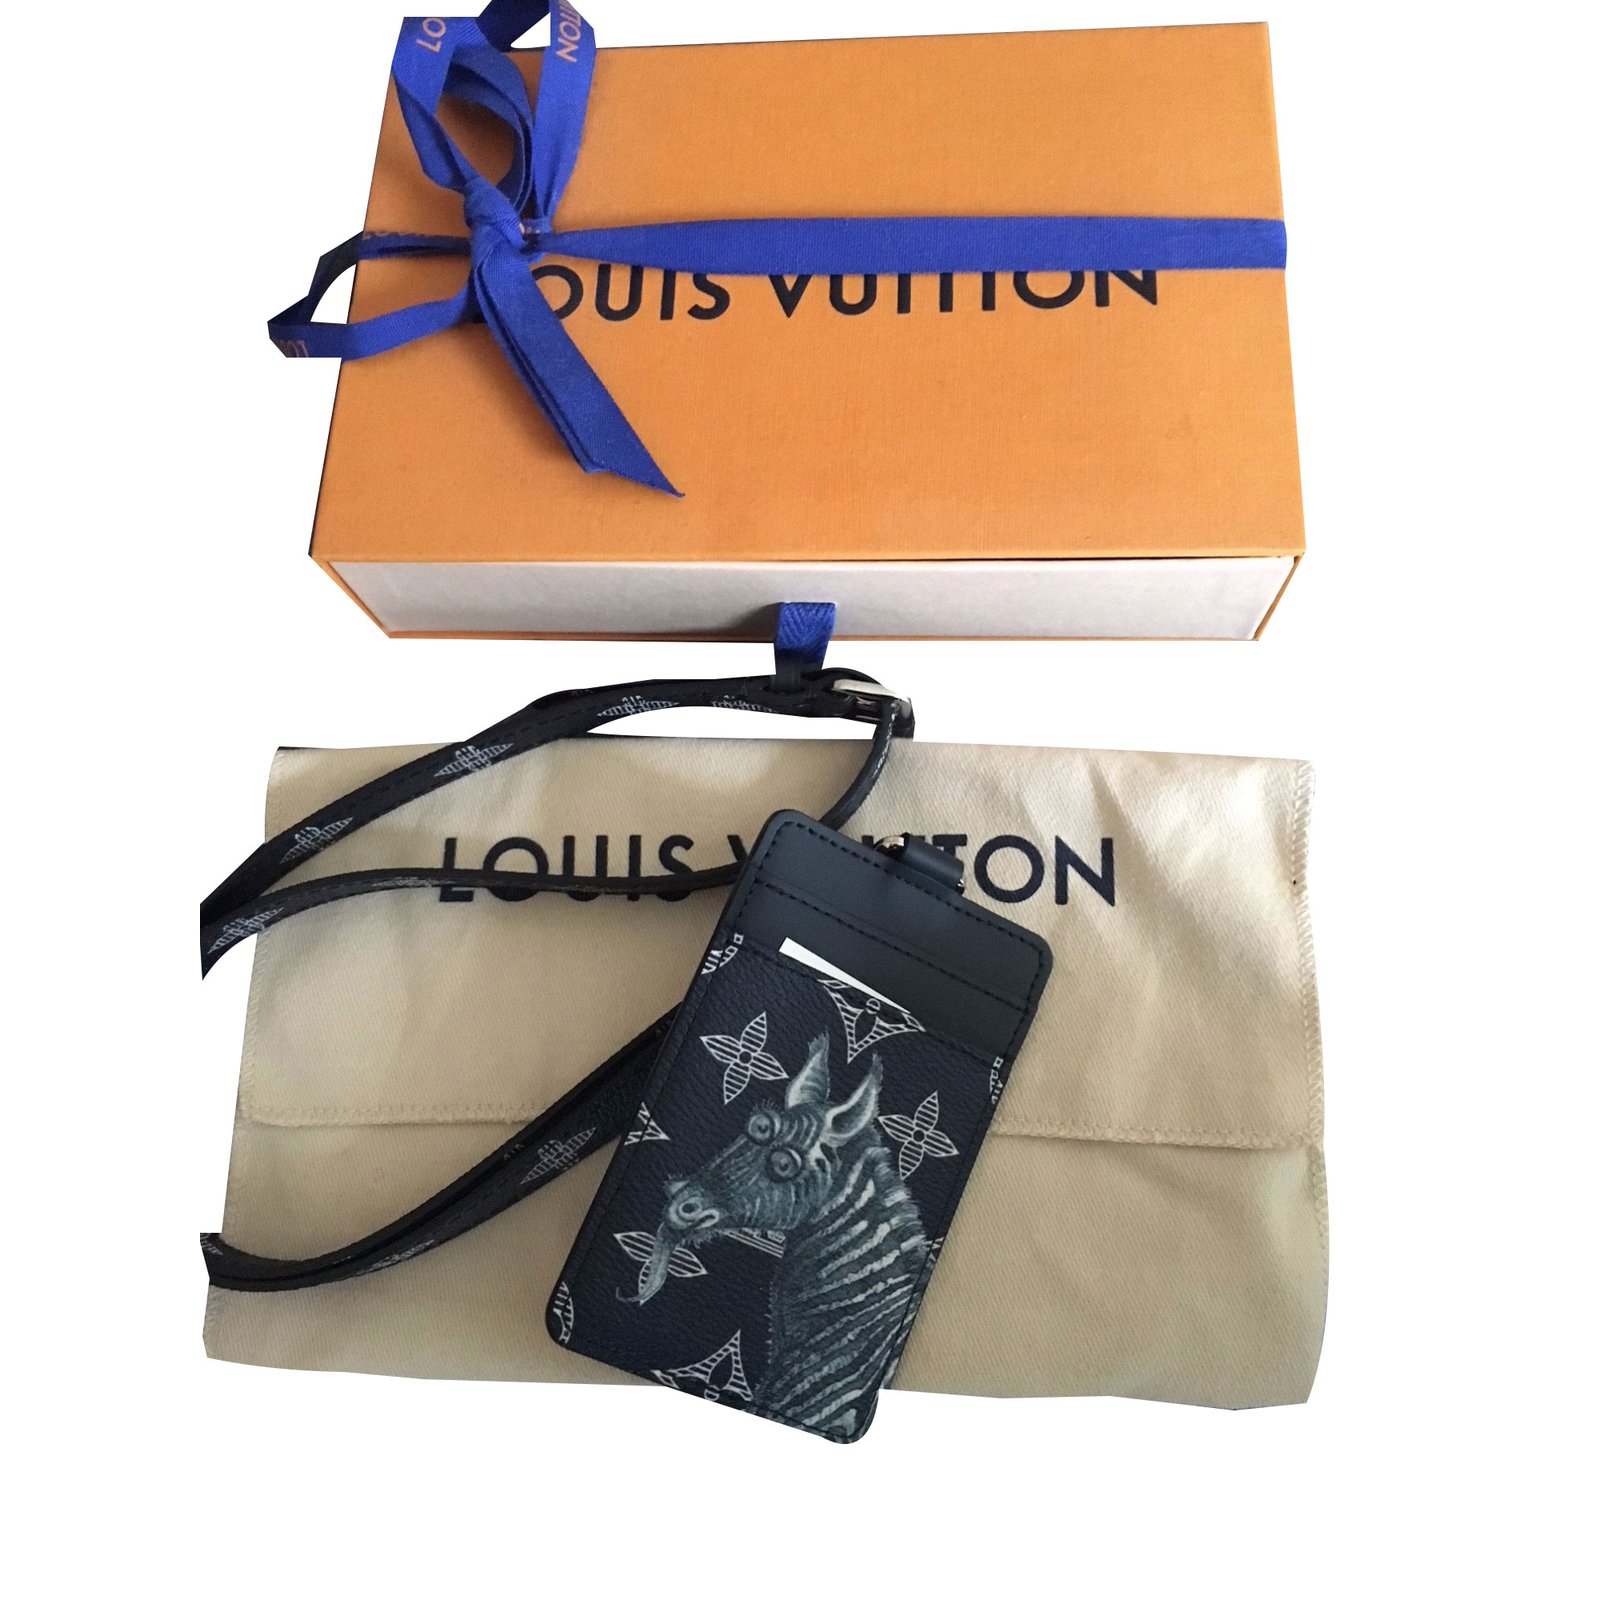 Louis-Vuitton gift card boxes